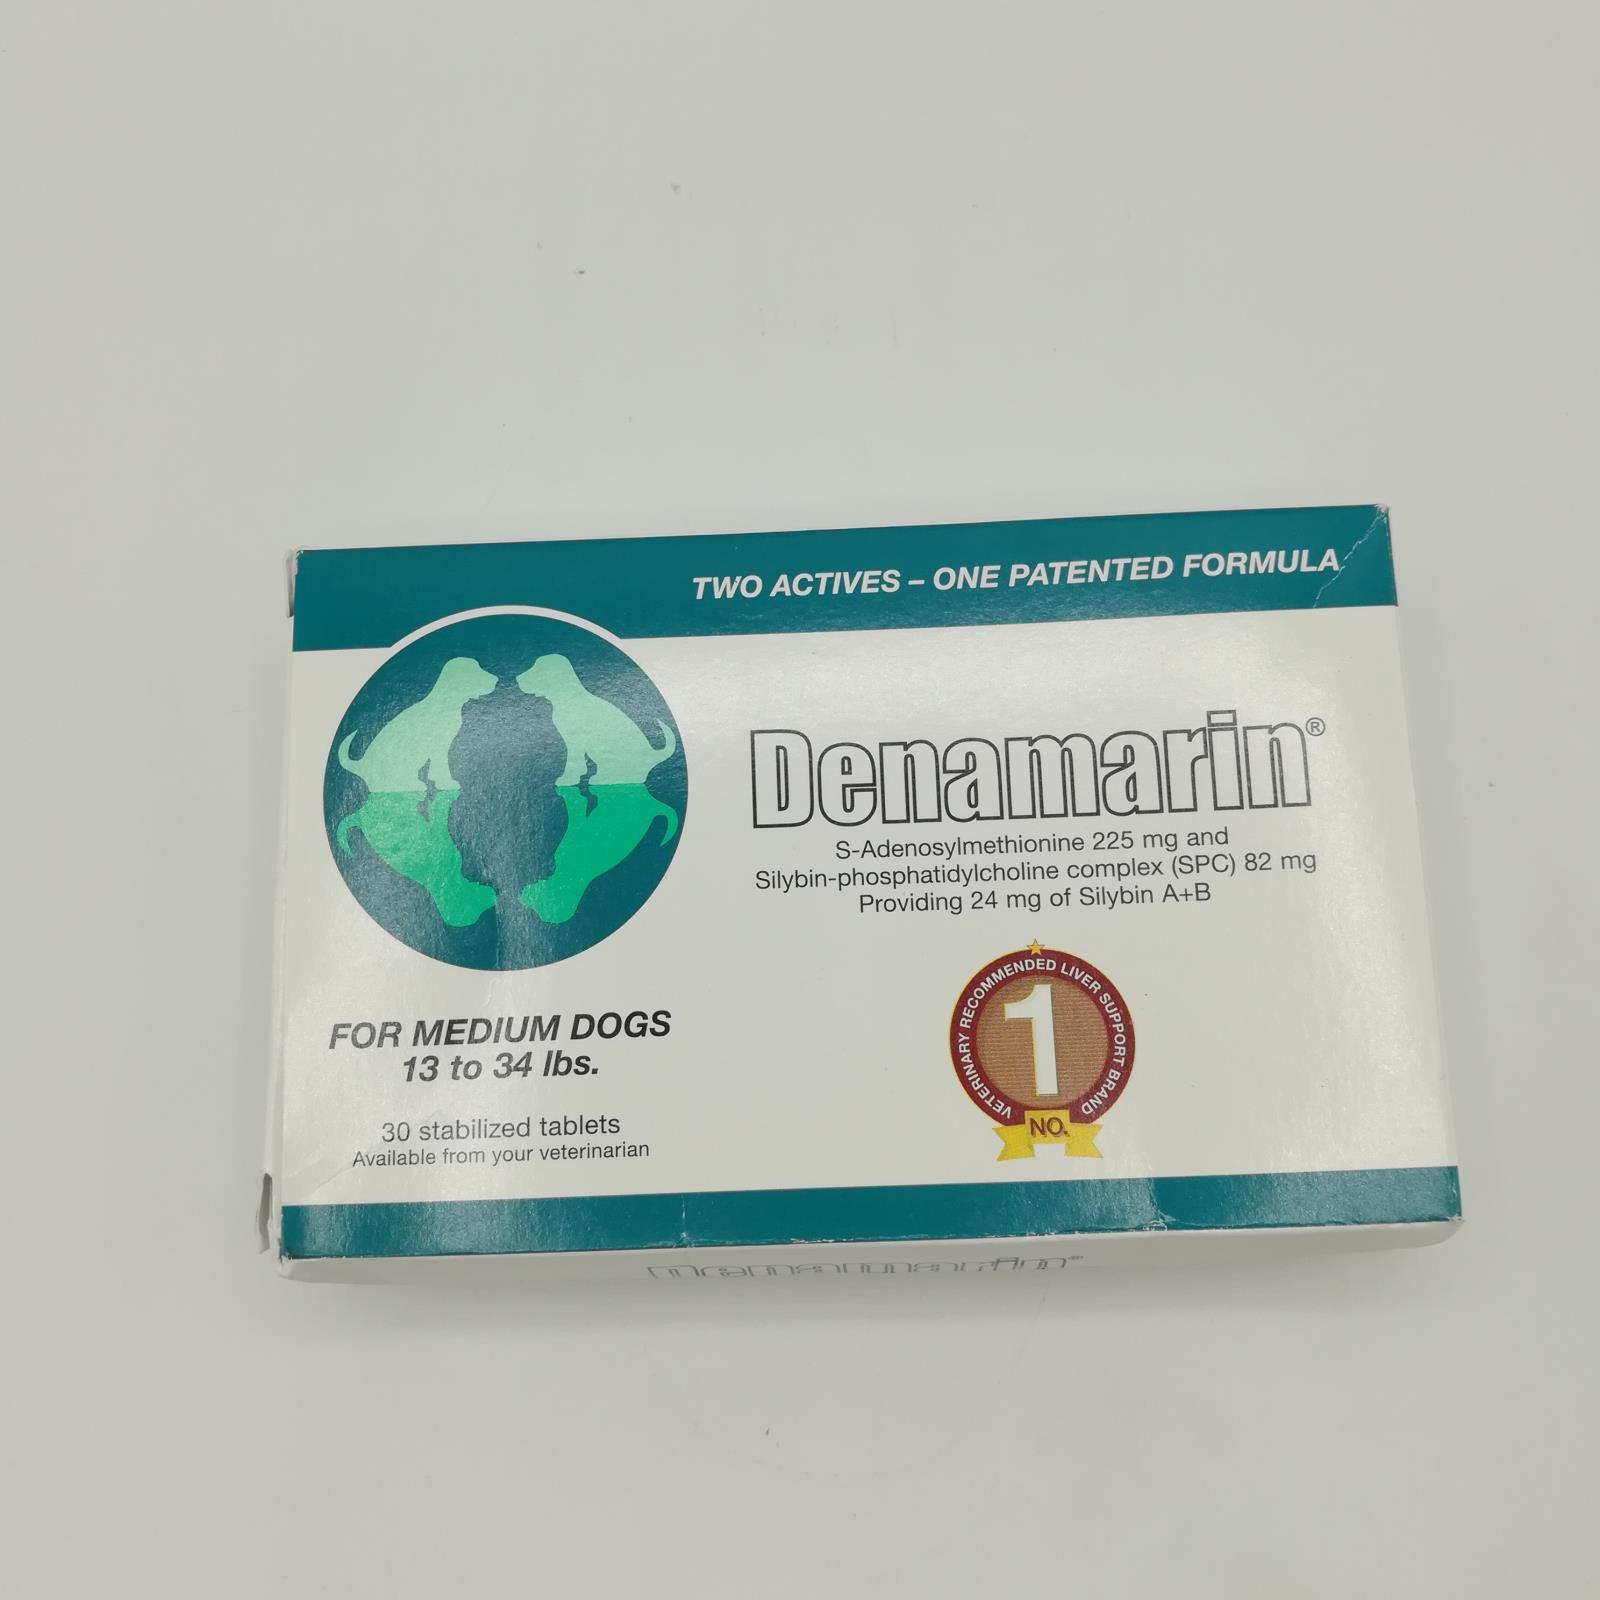 Nutramax Denamarin 30 stabilized Tablets for medium dogs , exp 02/2023